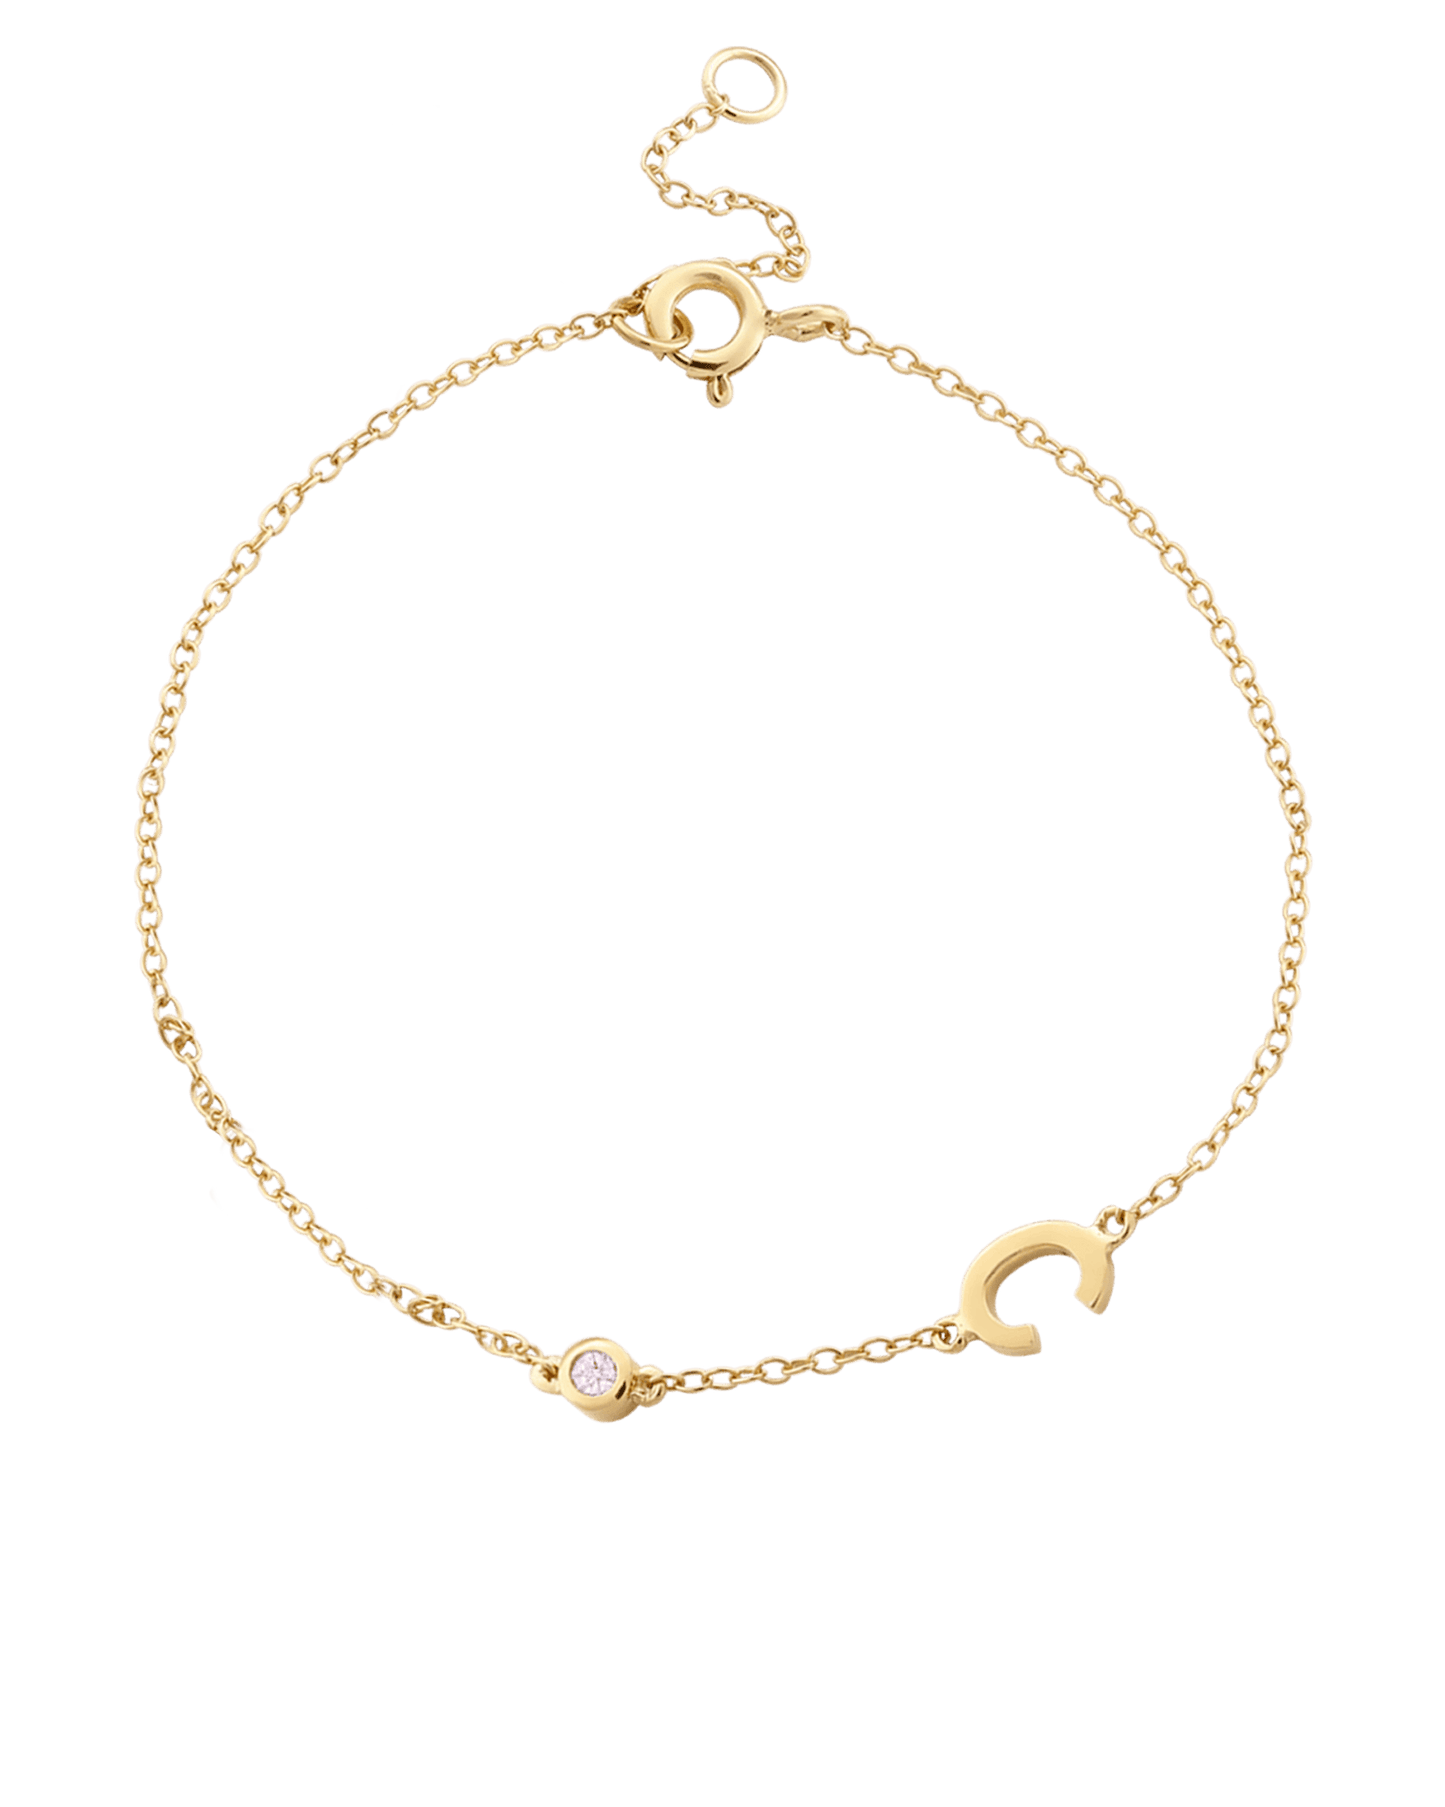 The Initial Bracelet with Diamonds - 18K Gold Vermeil Bracelets magal-dev 1 Initial + 1 Diamond 6"-7" (S-M wrist) 